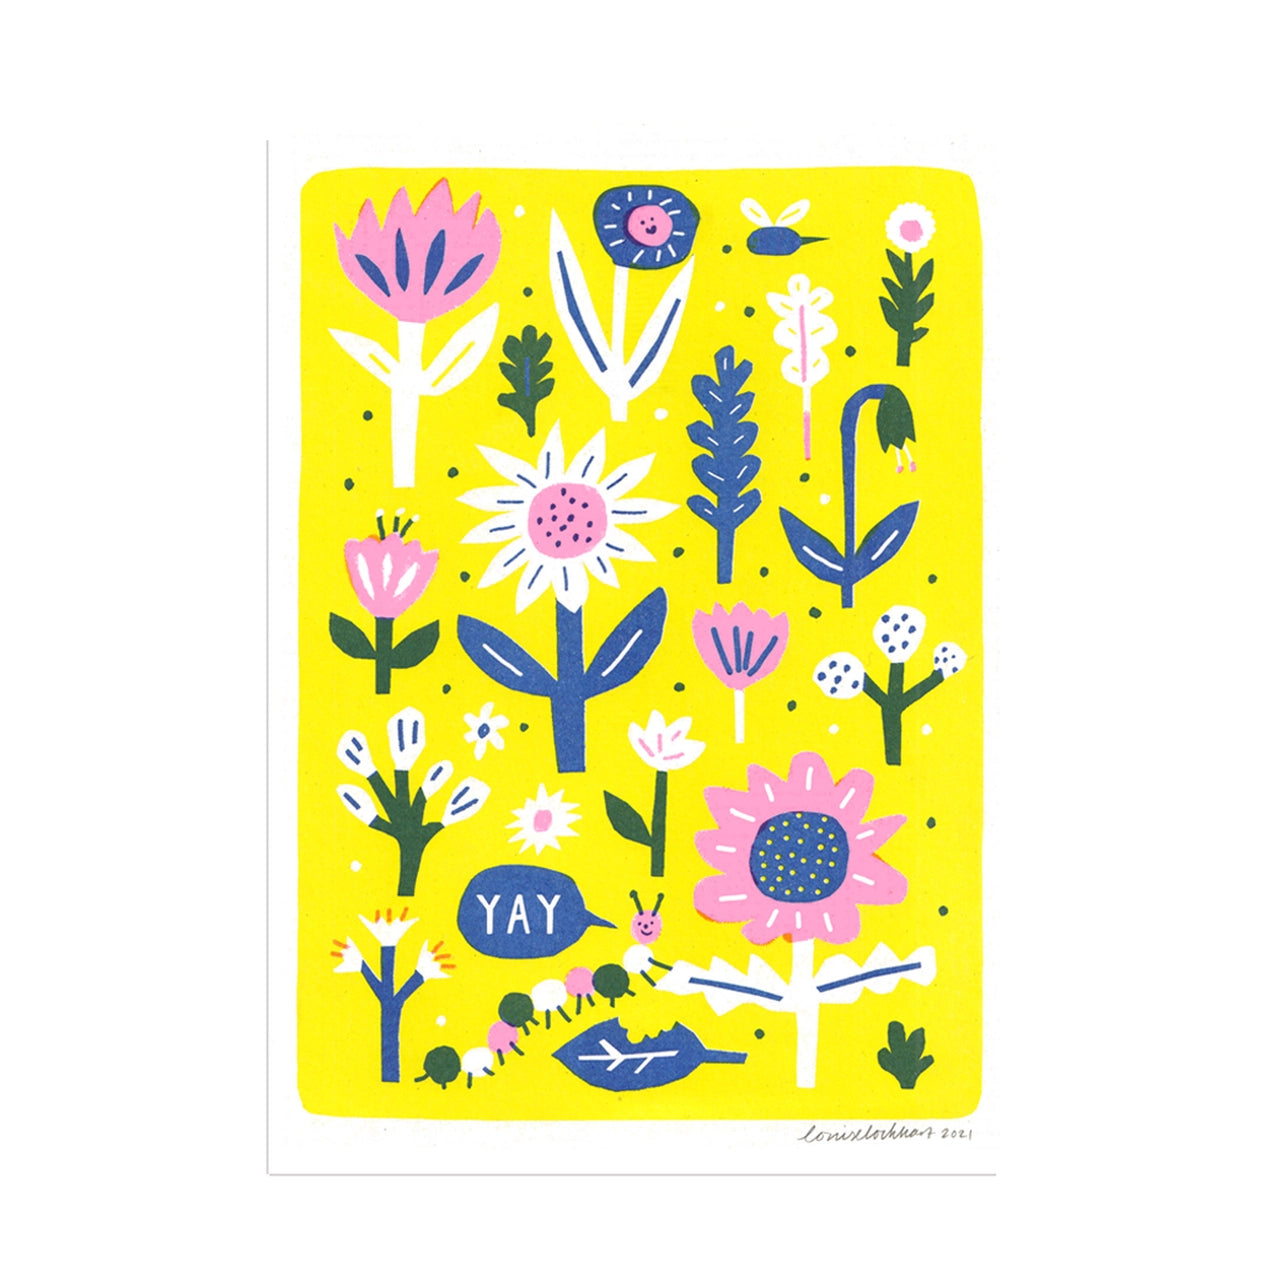 Yay Plants A4 Riso Print